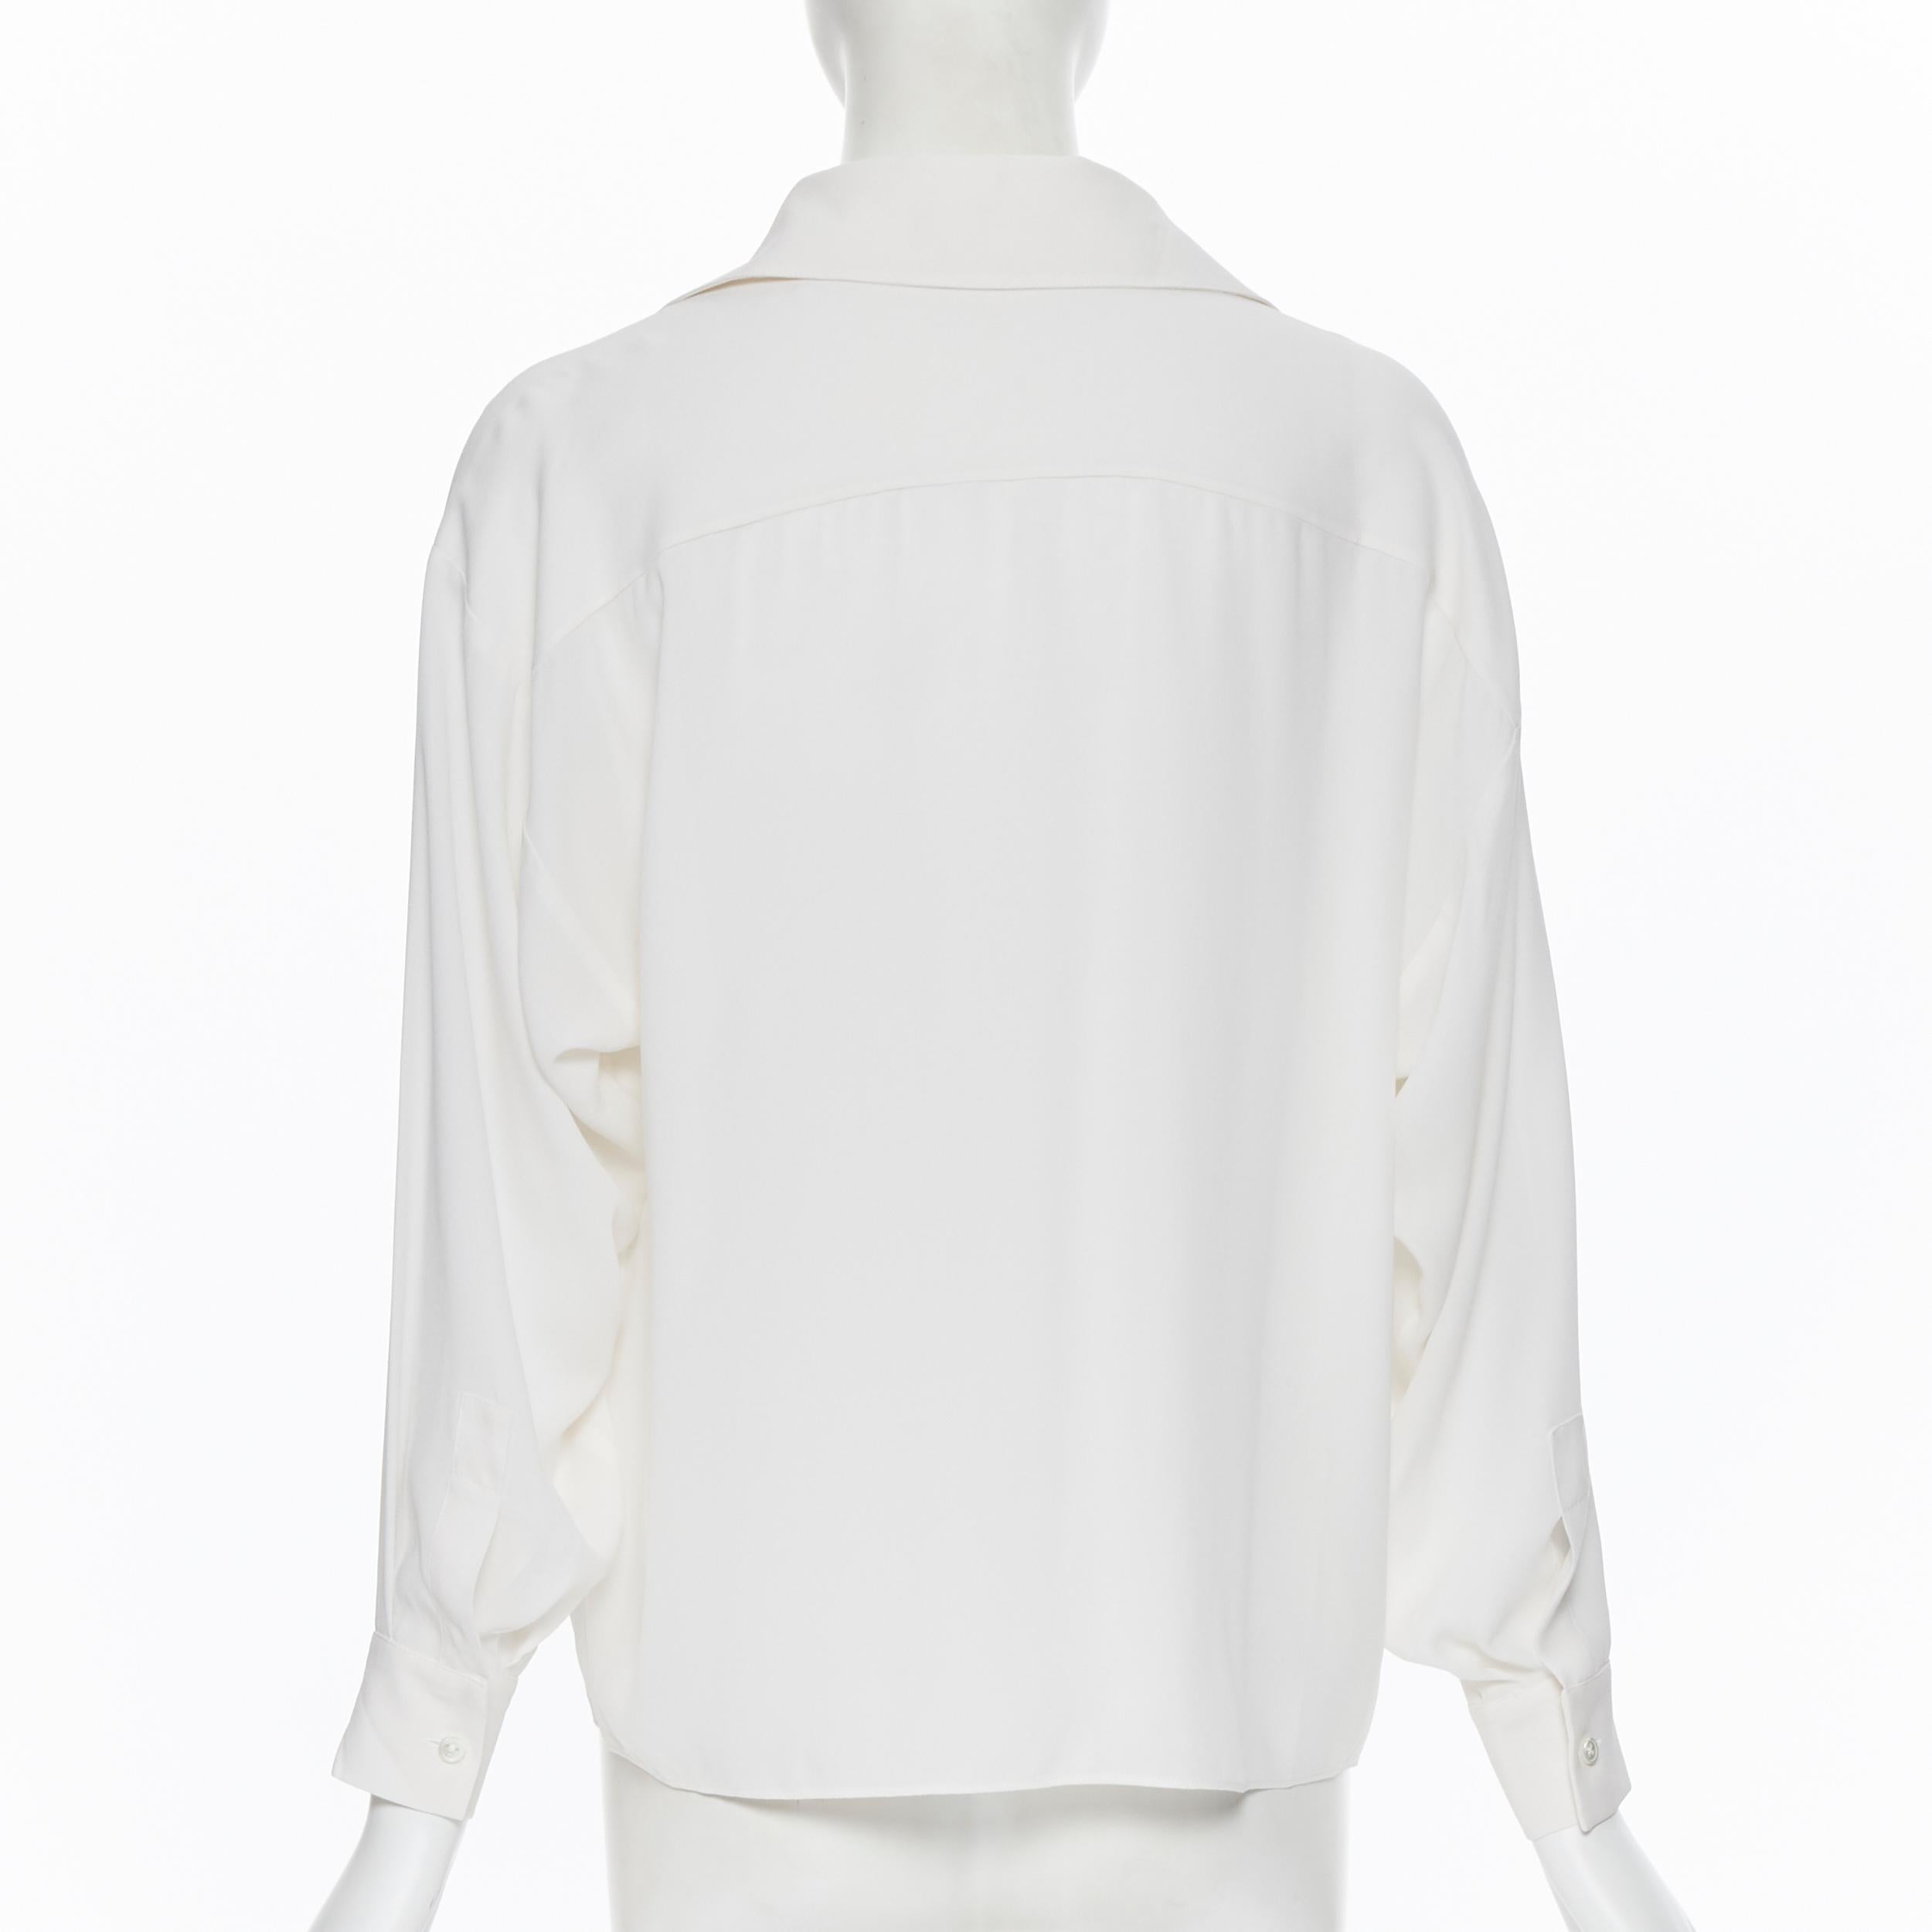 Women's MICHAEL KORS COLLECTION 100% silk  white foldover open front draped sihrt XS